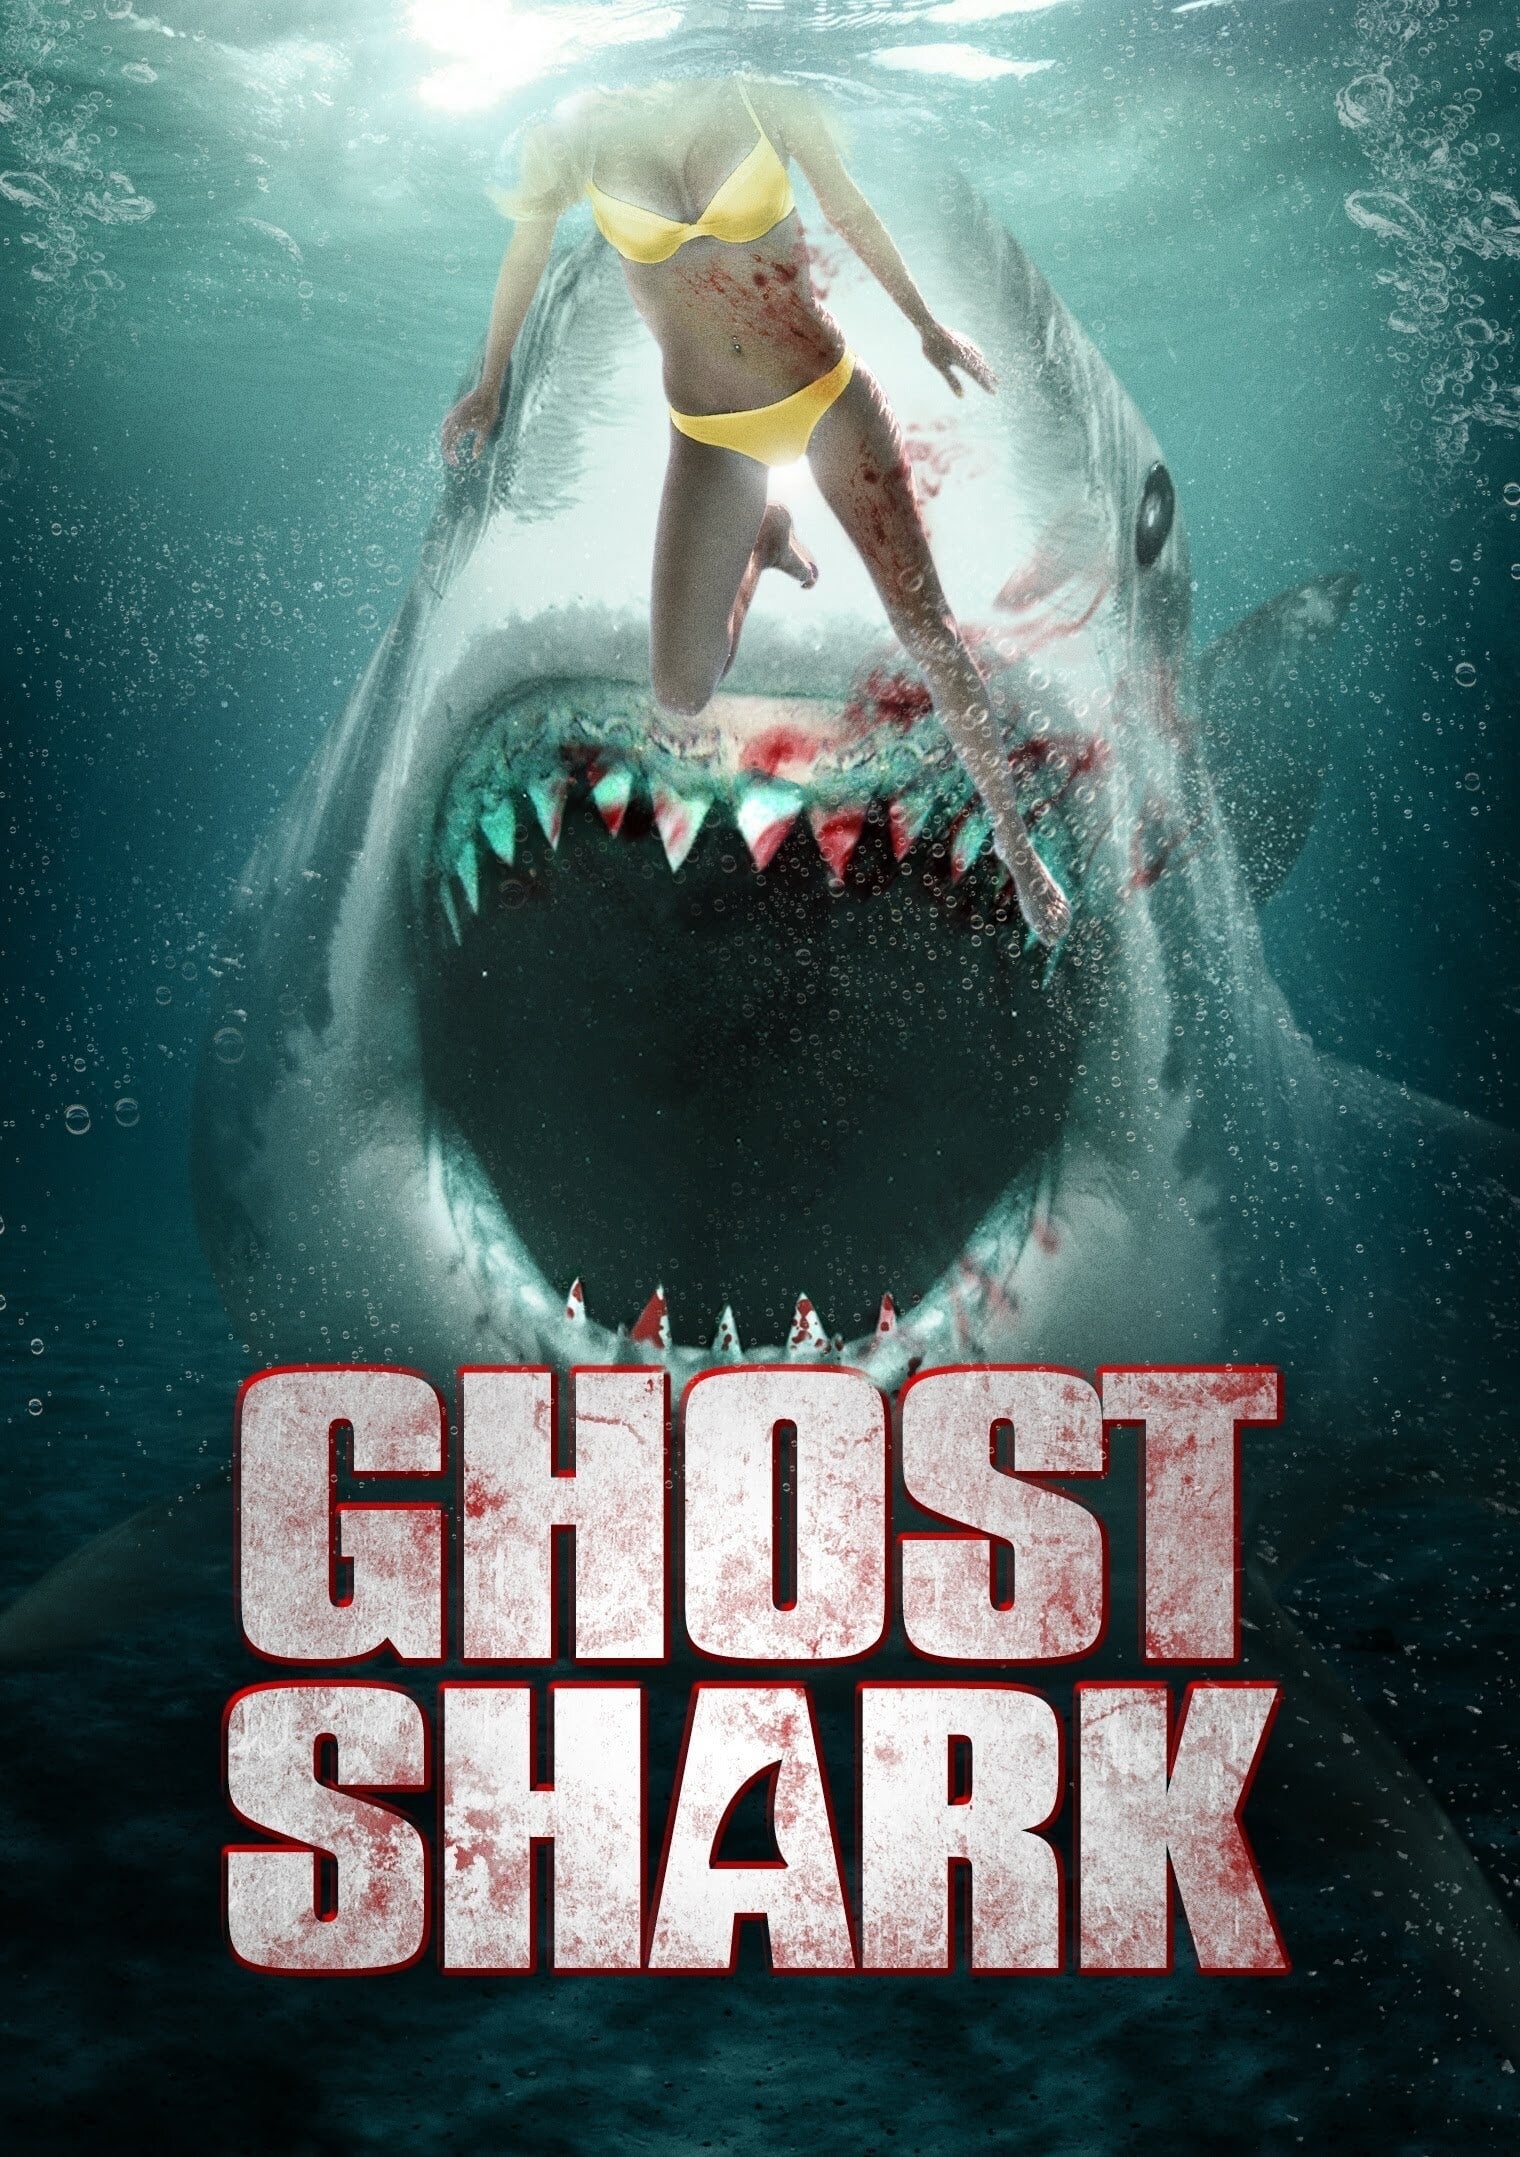 Ghost Shark [Sub-ITA] (2013)